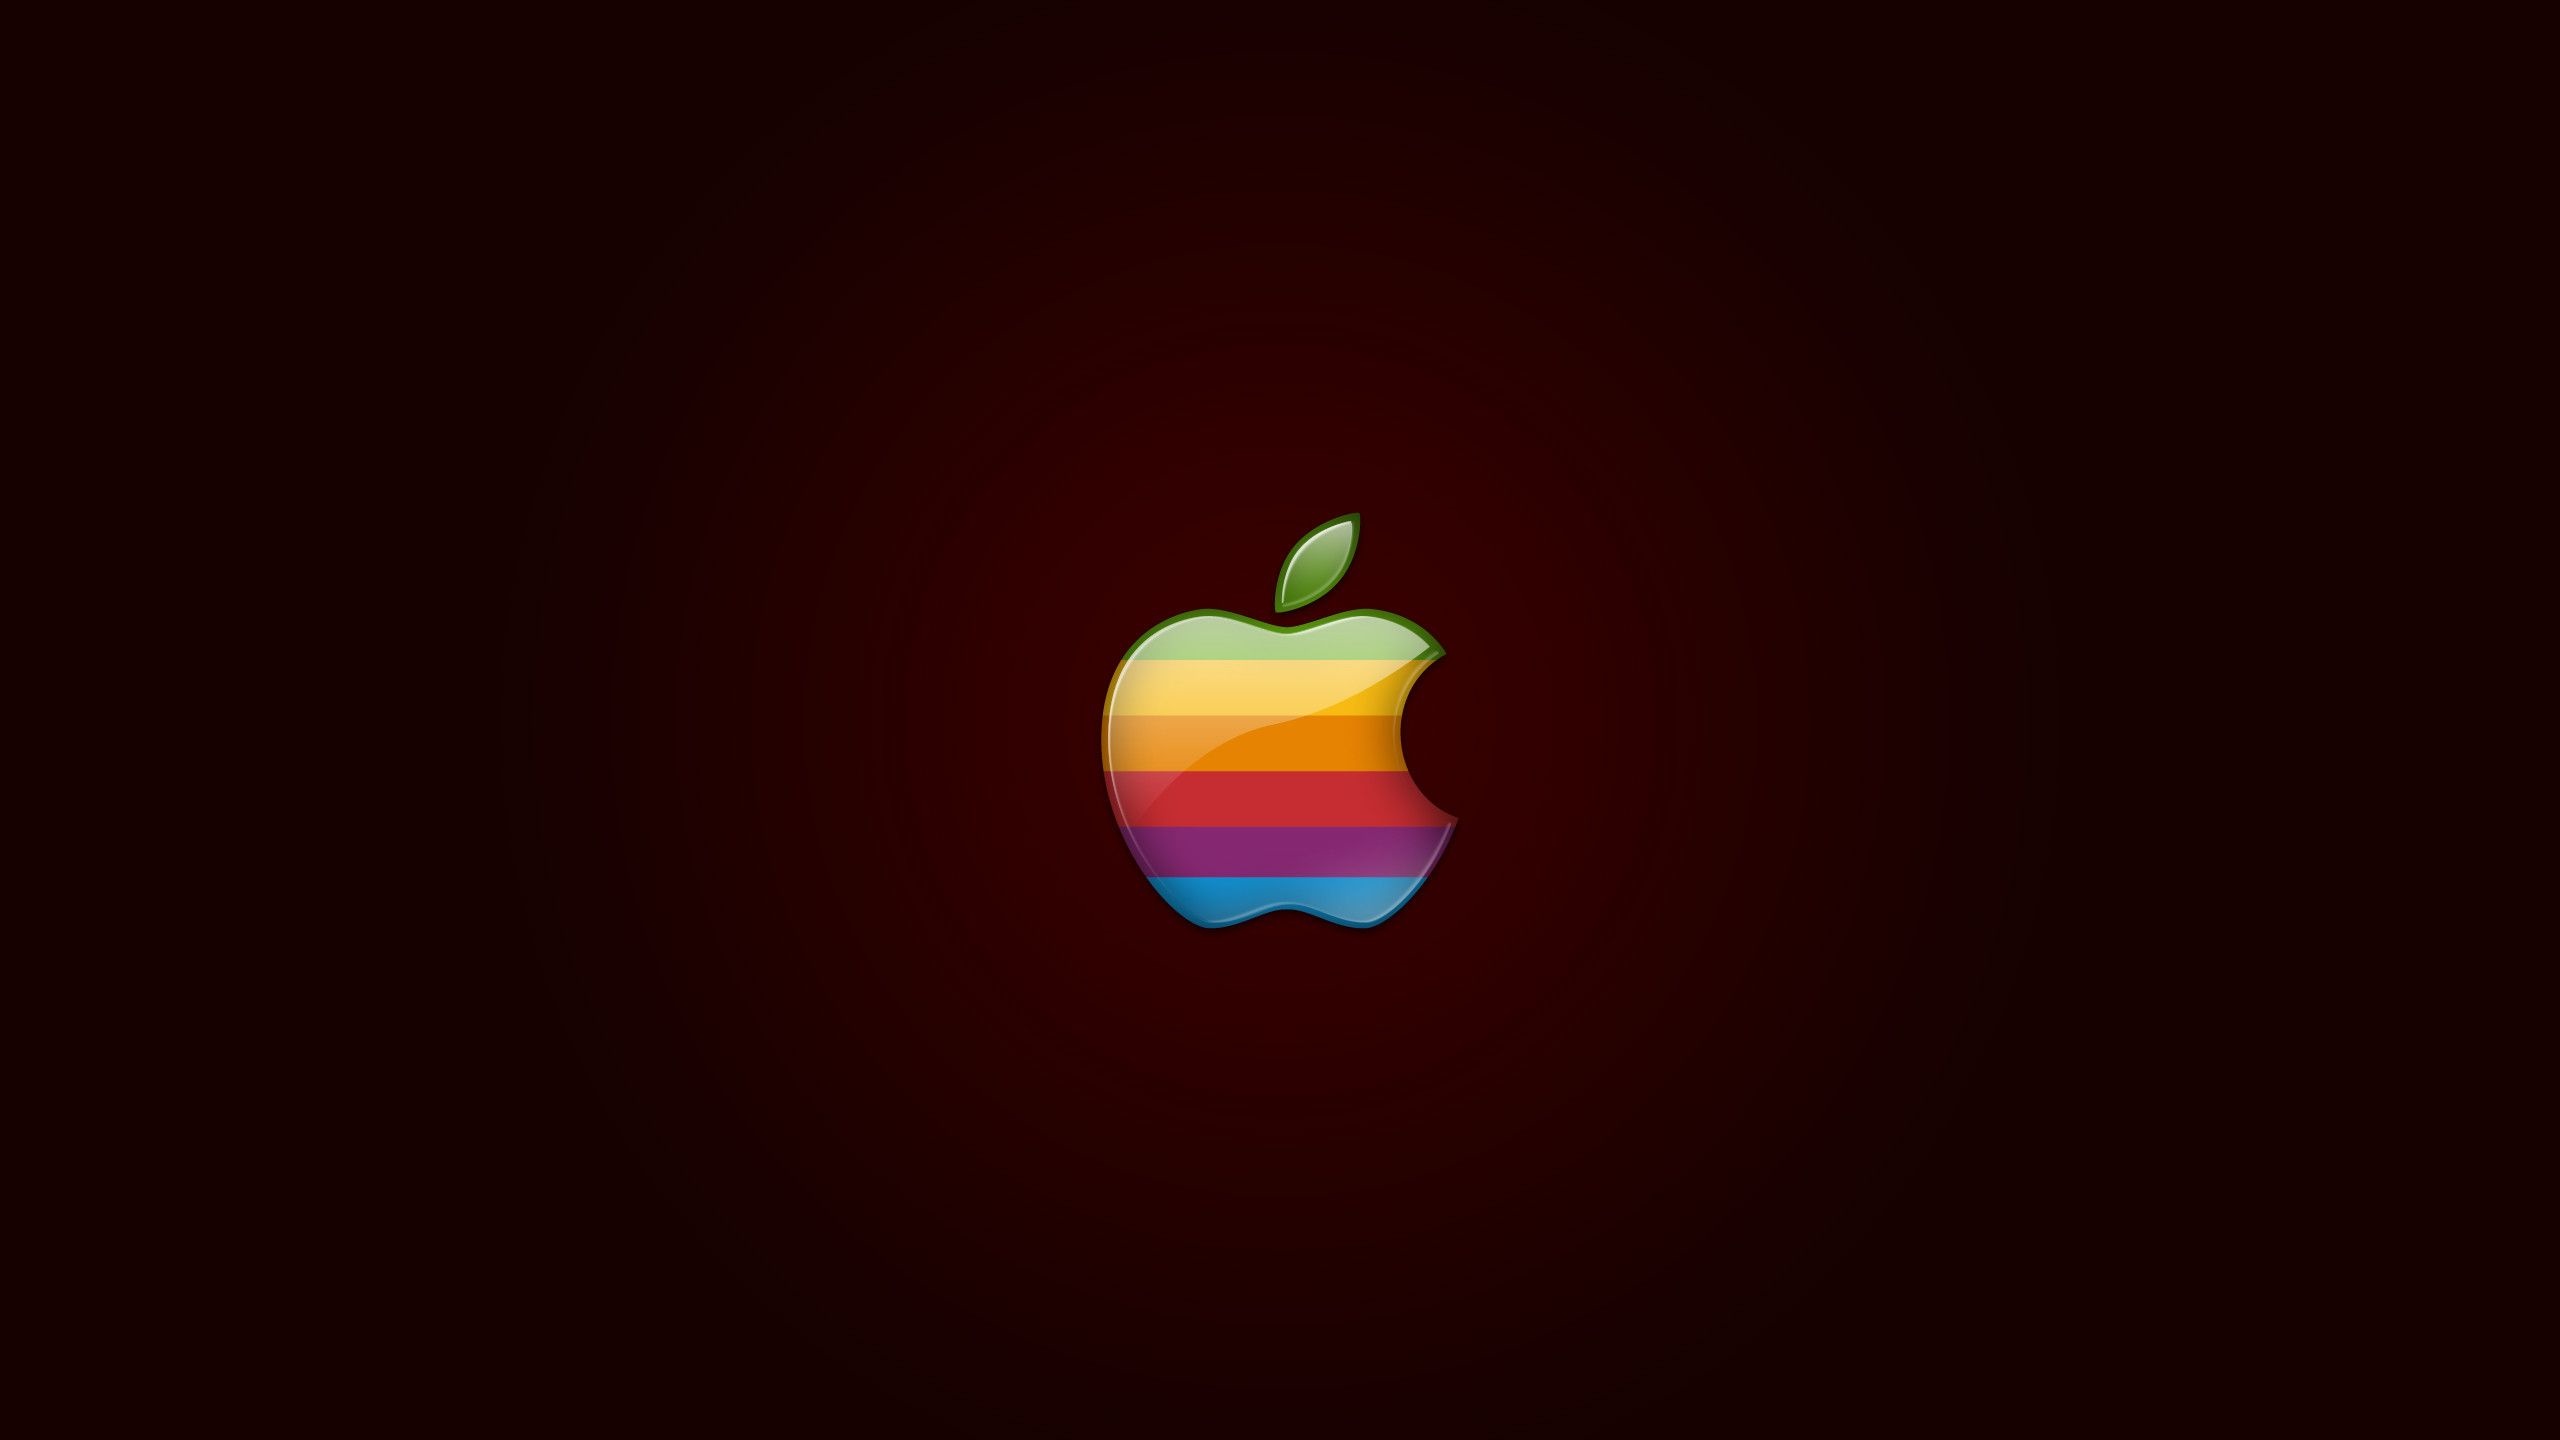 Apple logo, 4K wallpapers, High-definition graphics, Digital elegance, 2560x1440 HD Desktop